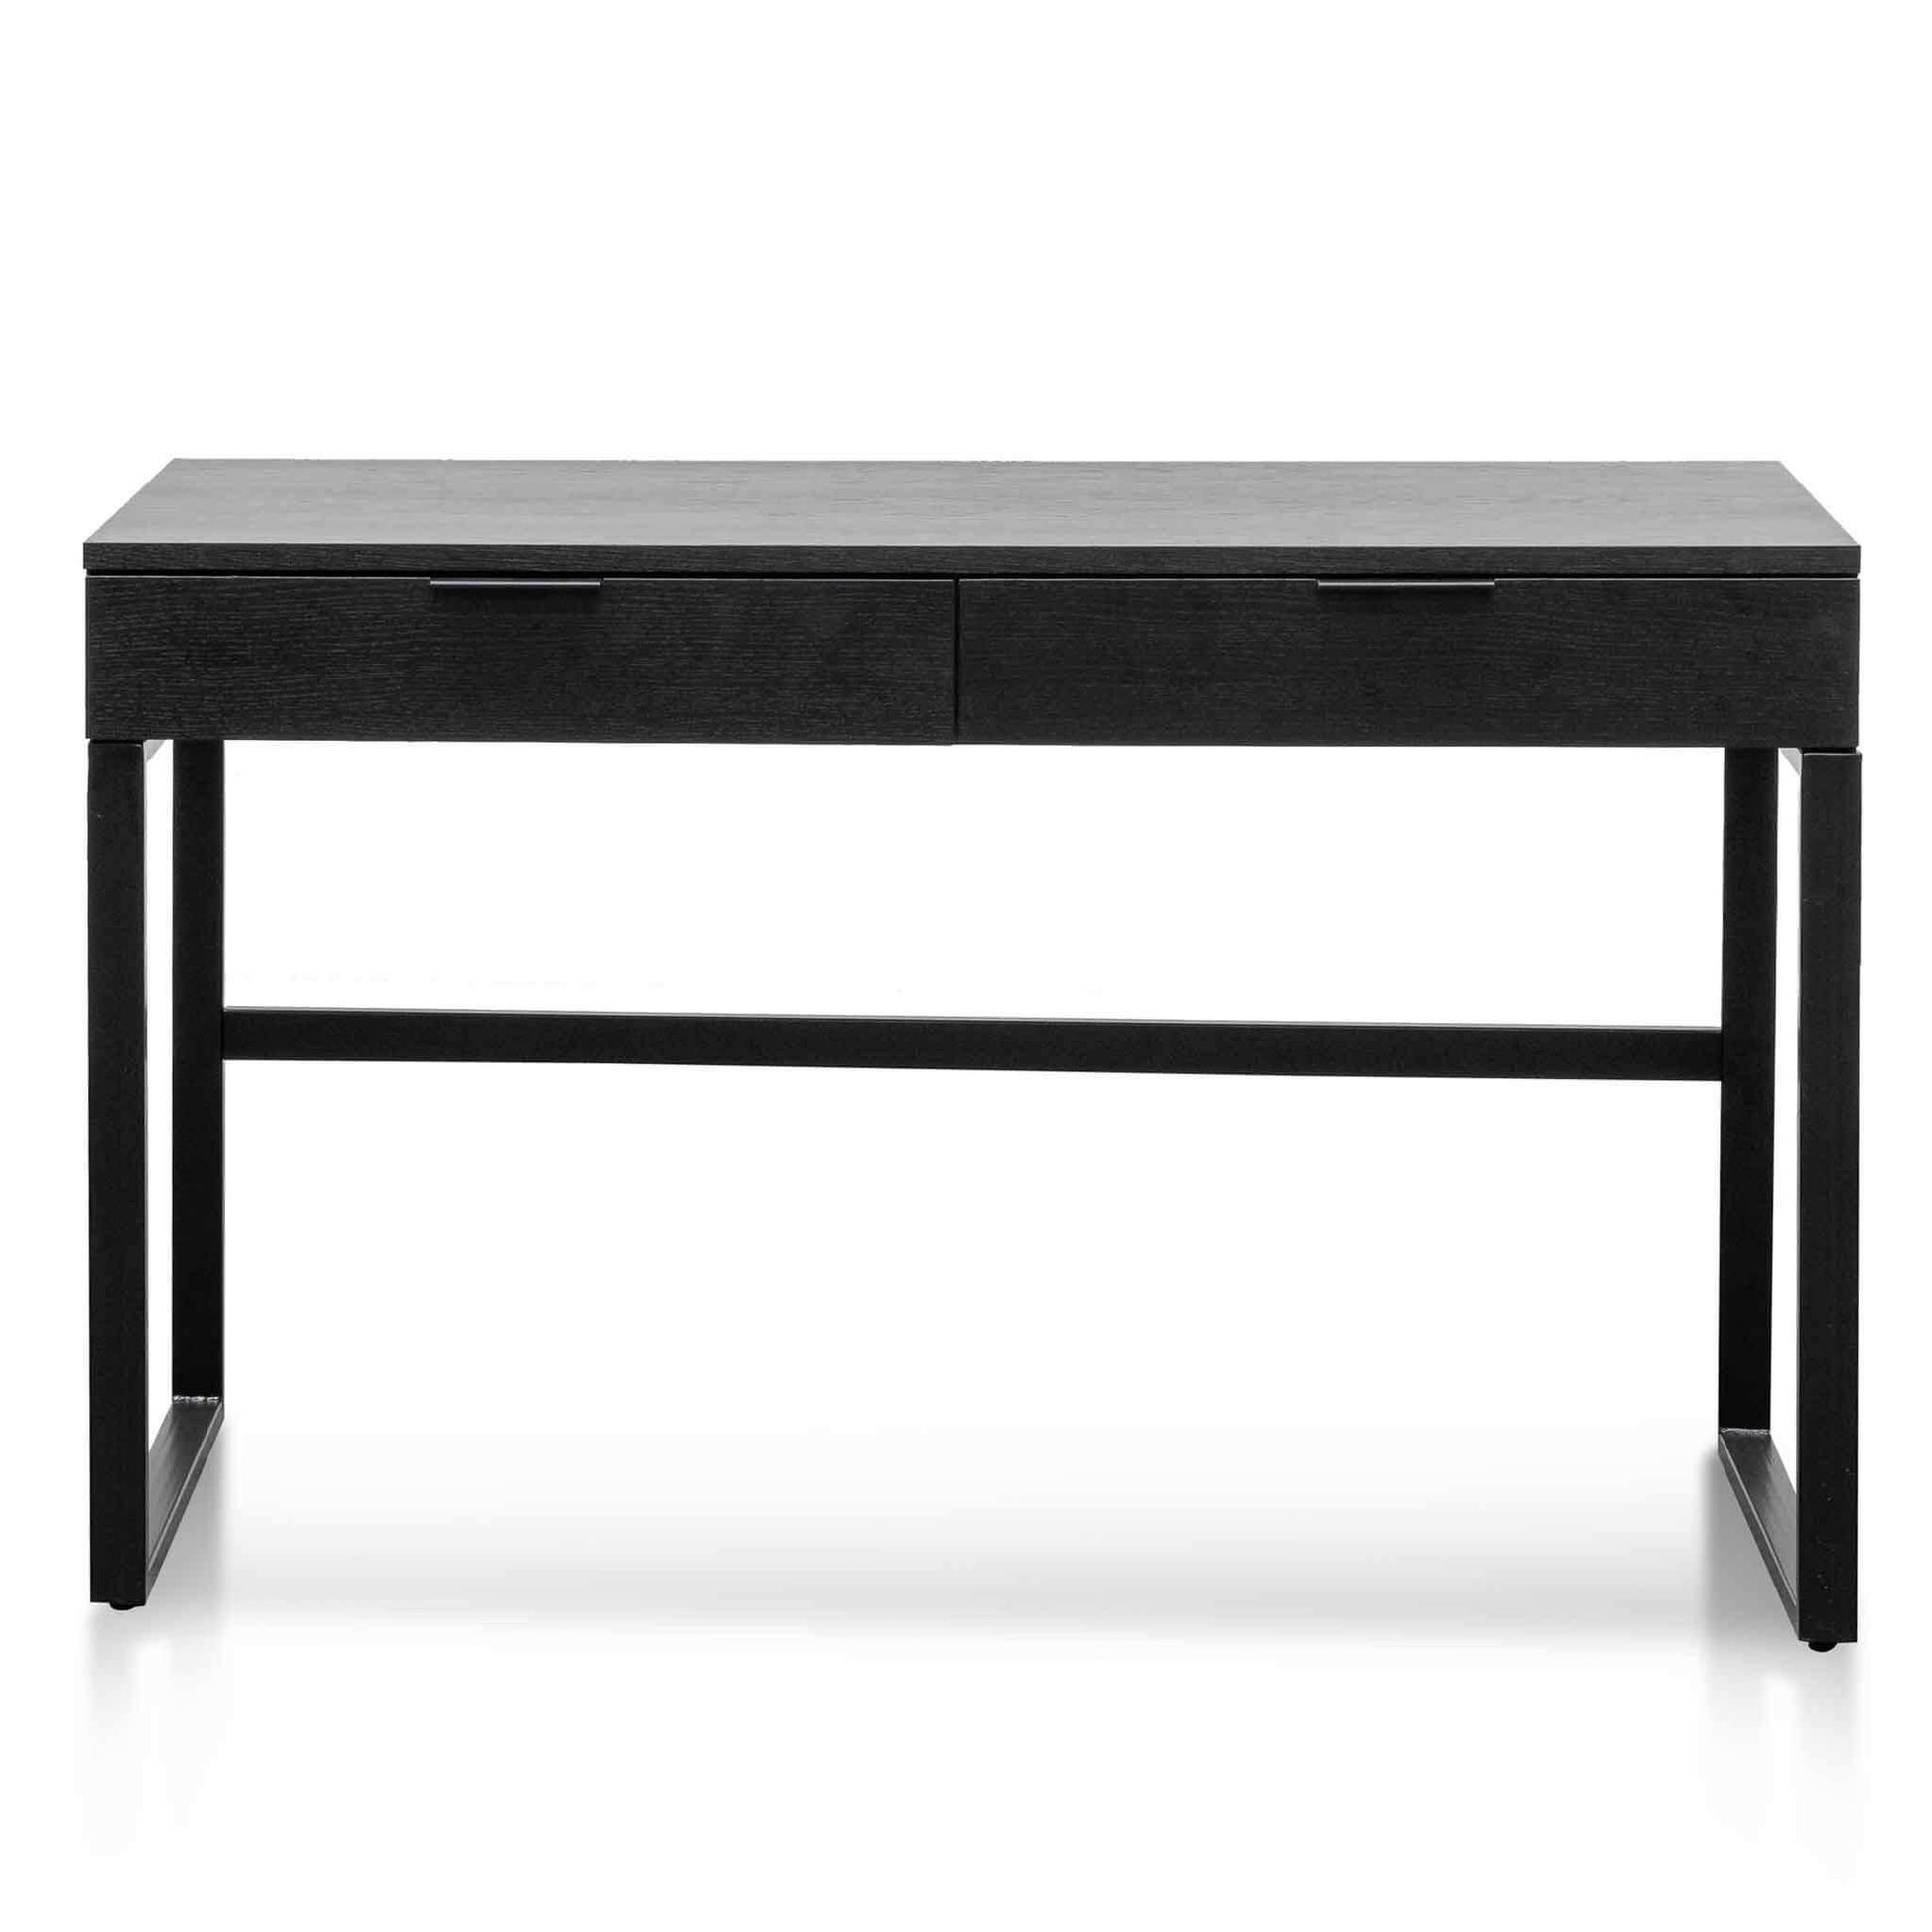 Calibre 120cm Home Office Desk - Black-Office Desks-Calibre-Prime Furniture